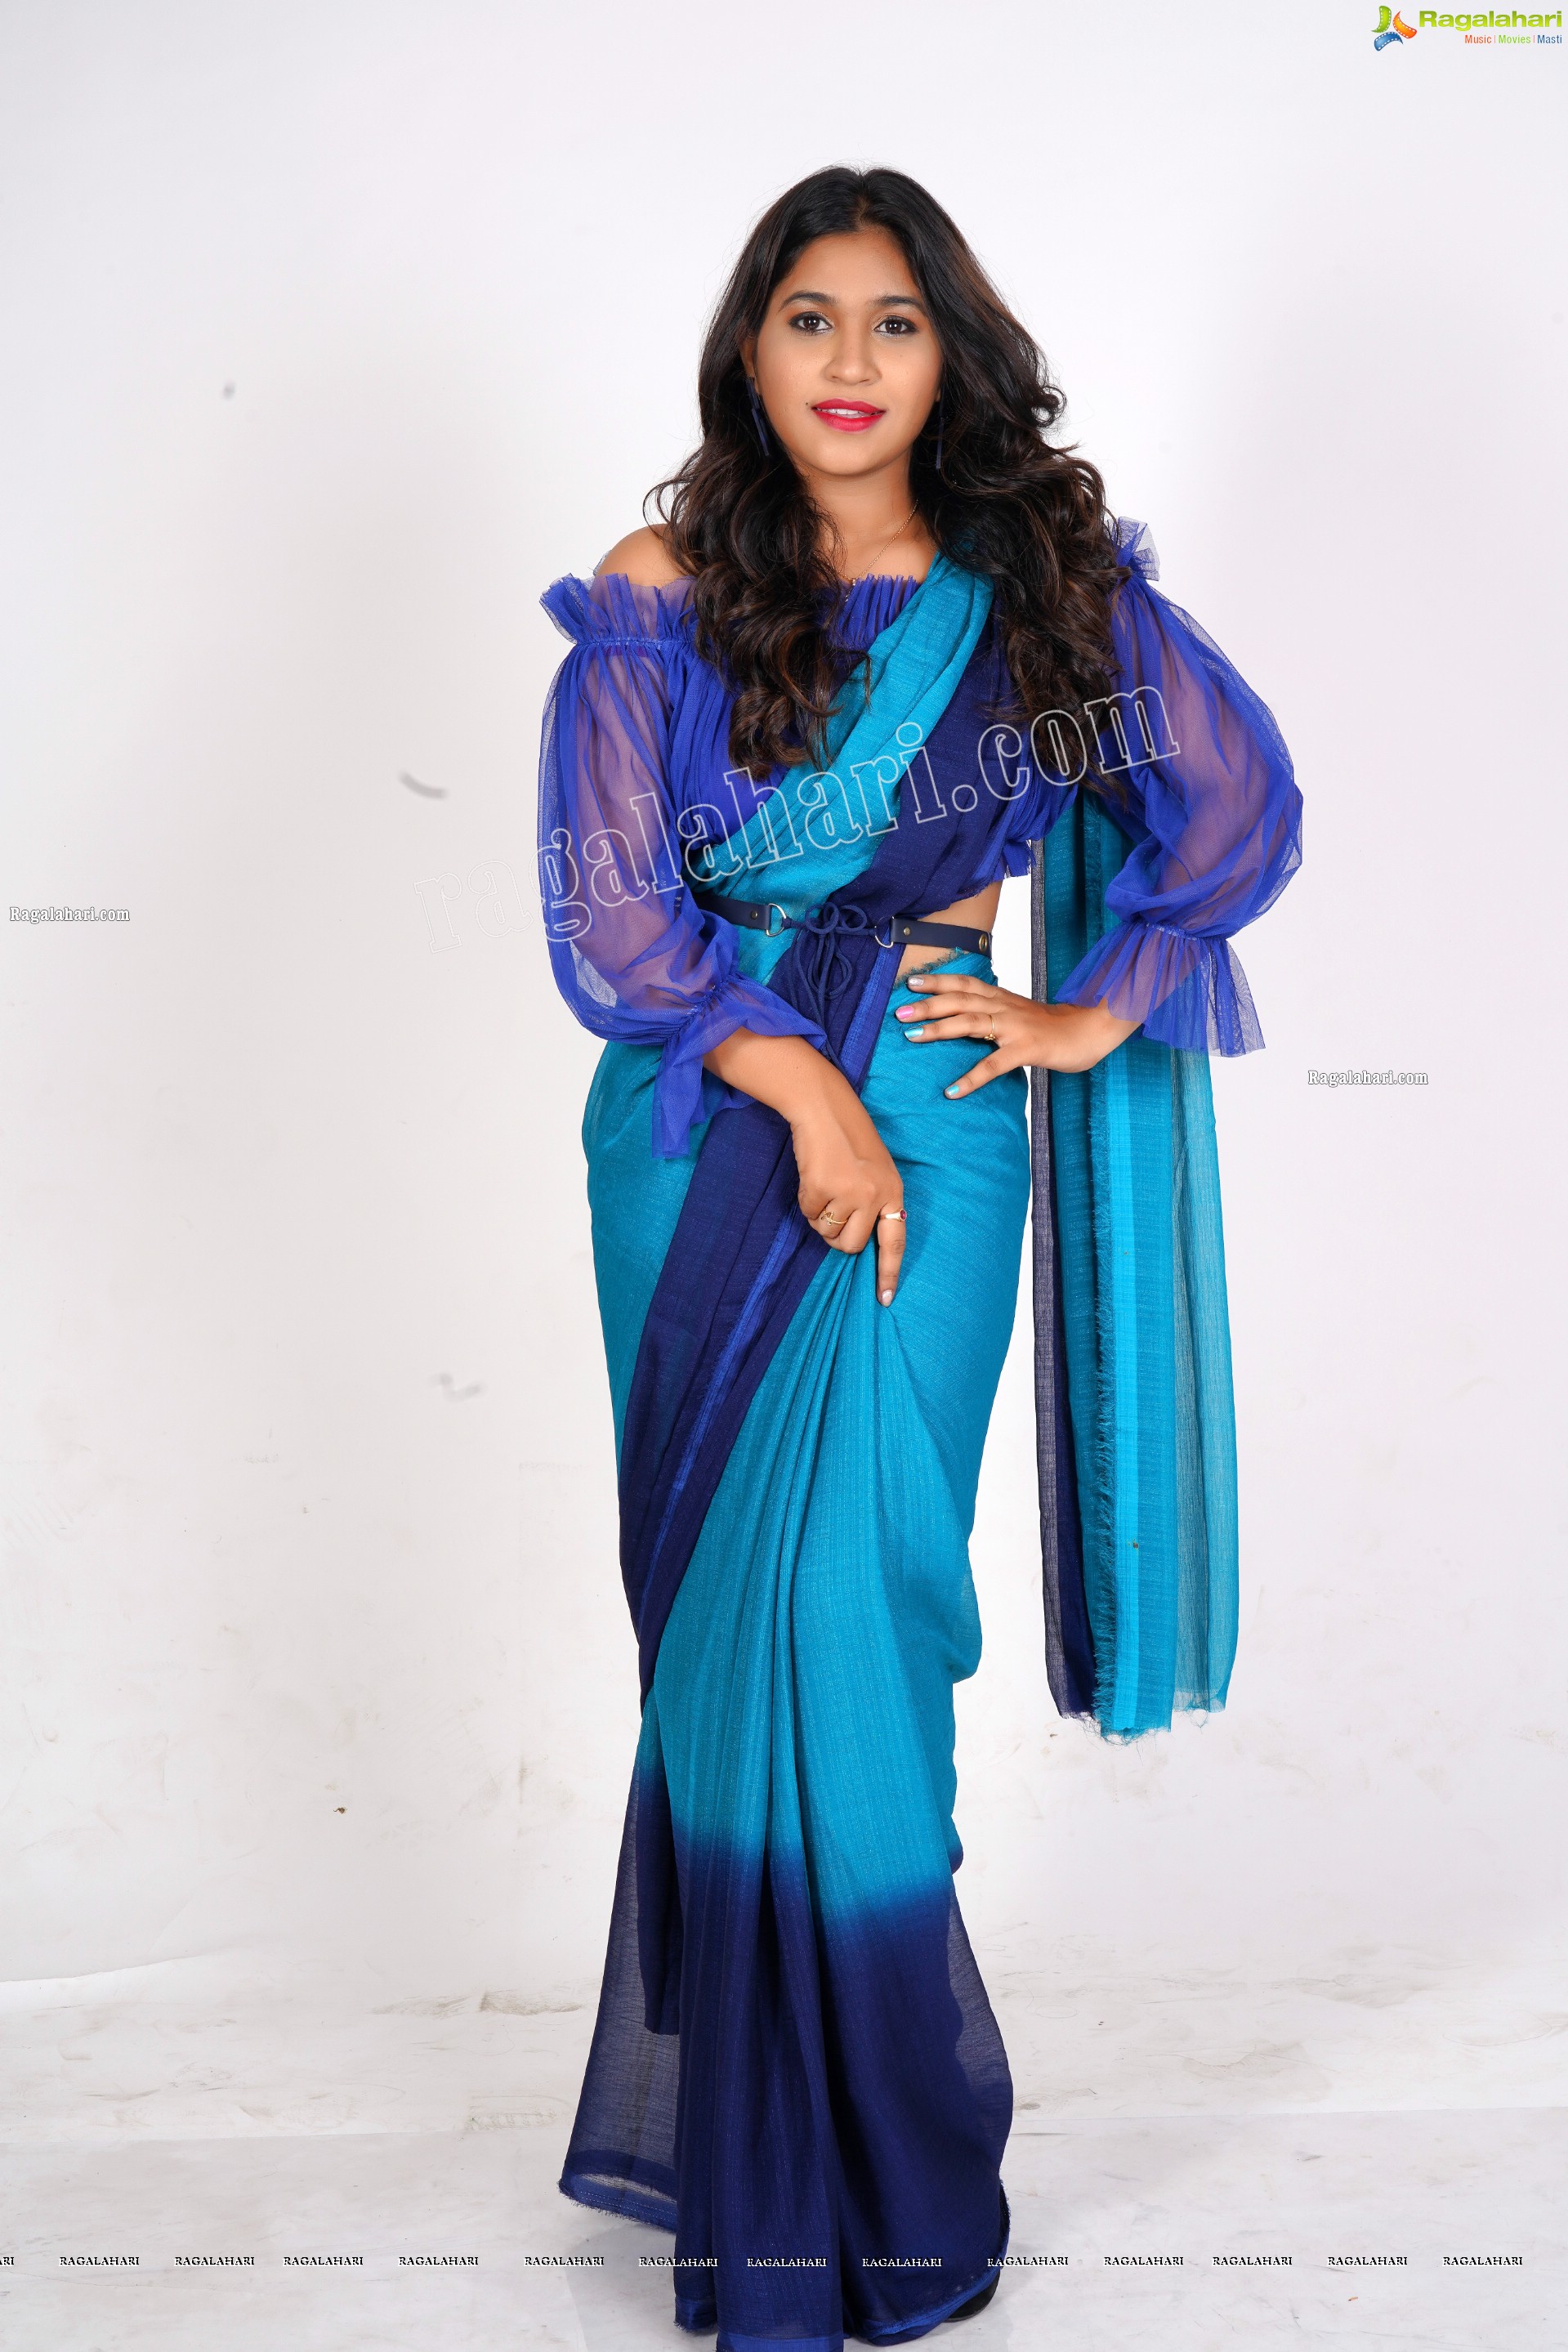 Honey Royal in Royal Blue Saree, Exclusive Photoshoot